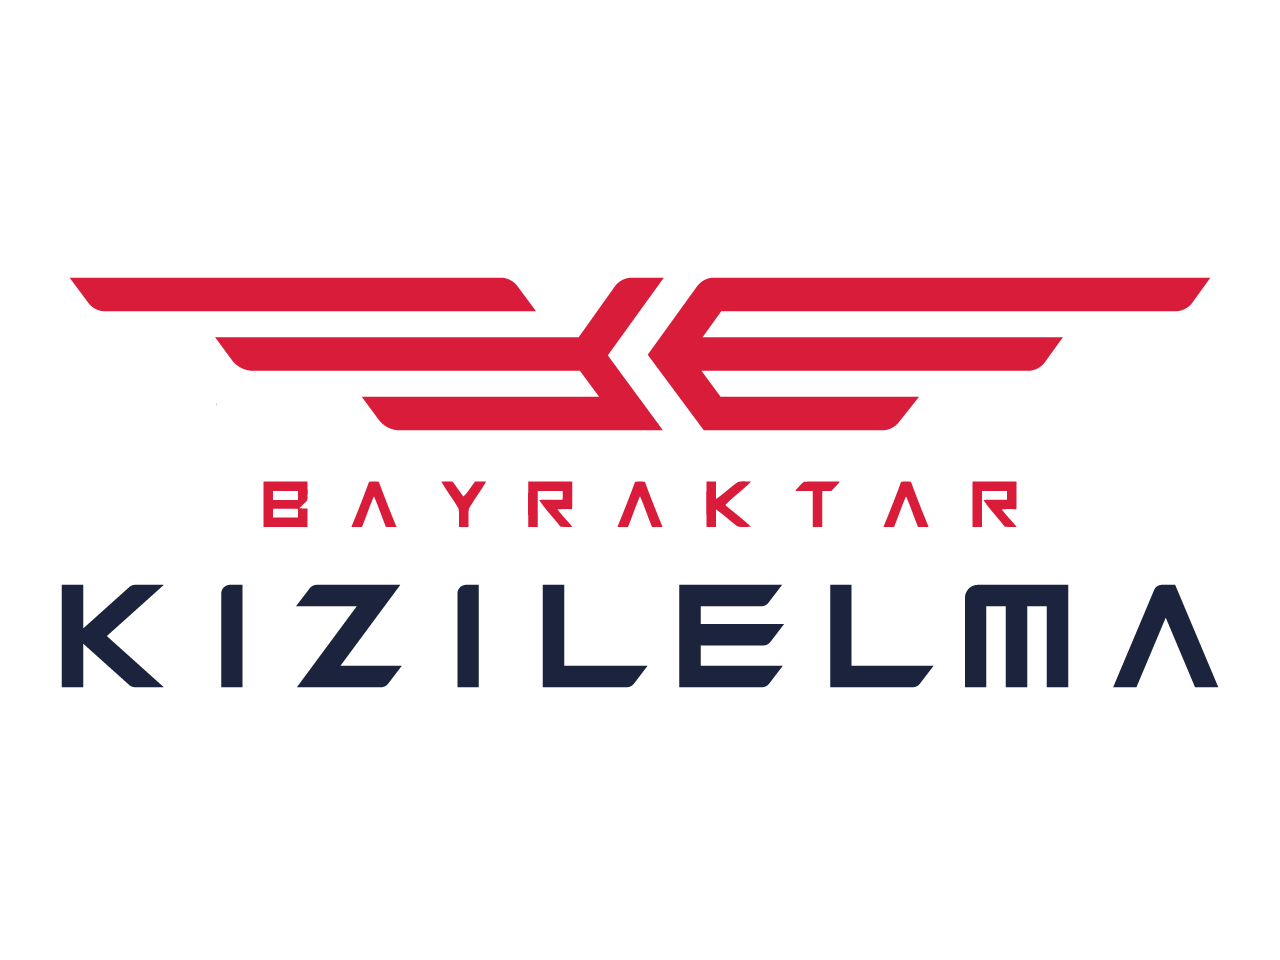 Bayraktar KIZILELMA Logo [Red Apple] png